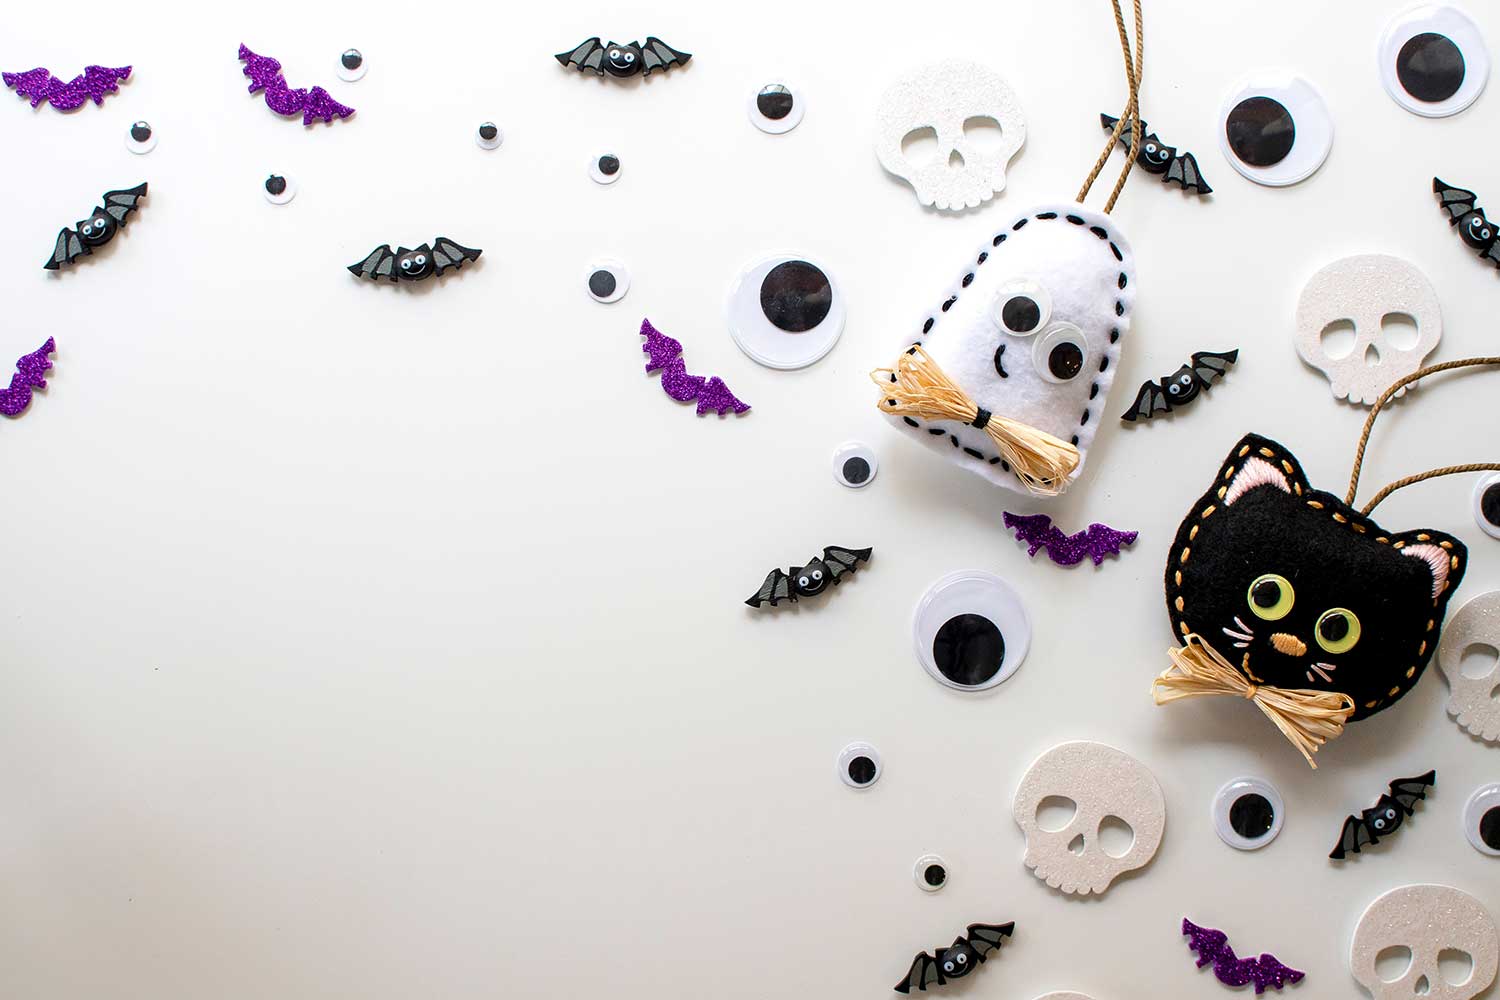  Cute Black Cat & Ghost with Eyes, Skulls, & Bats Halloween Background